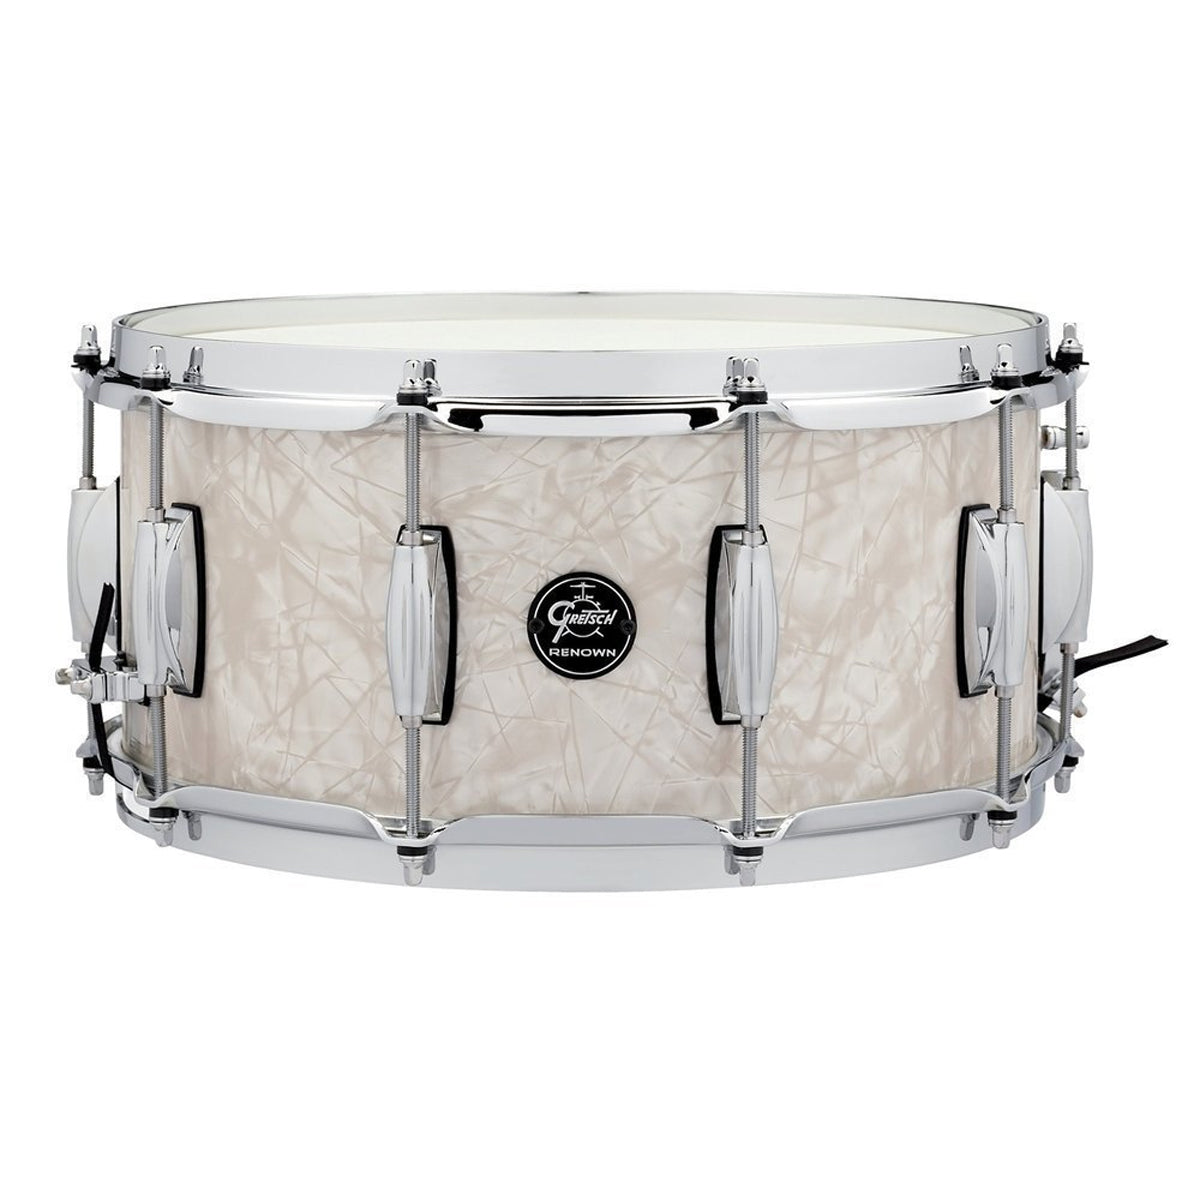 Gretsch Renown Maple 14"x6.5" Snare Drum in Vintage Pearl